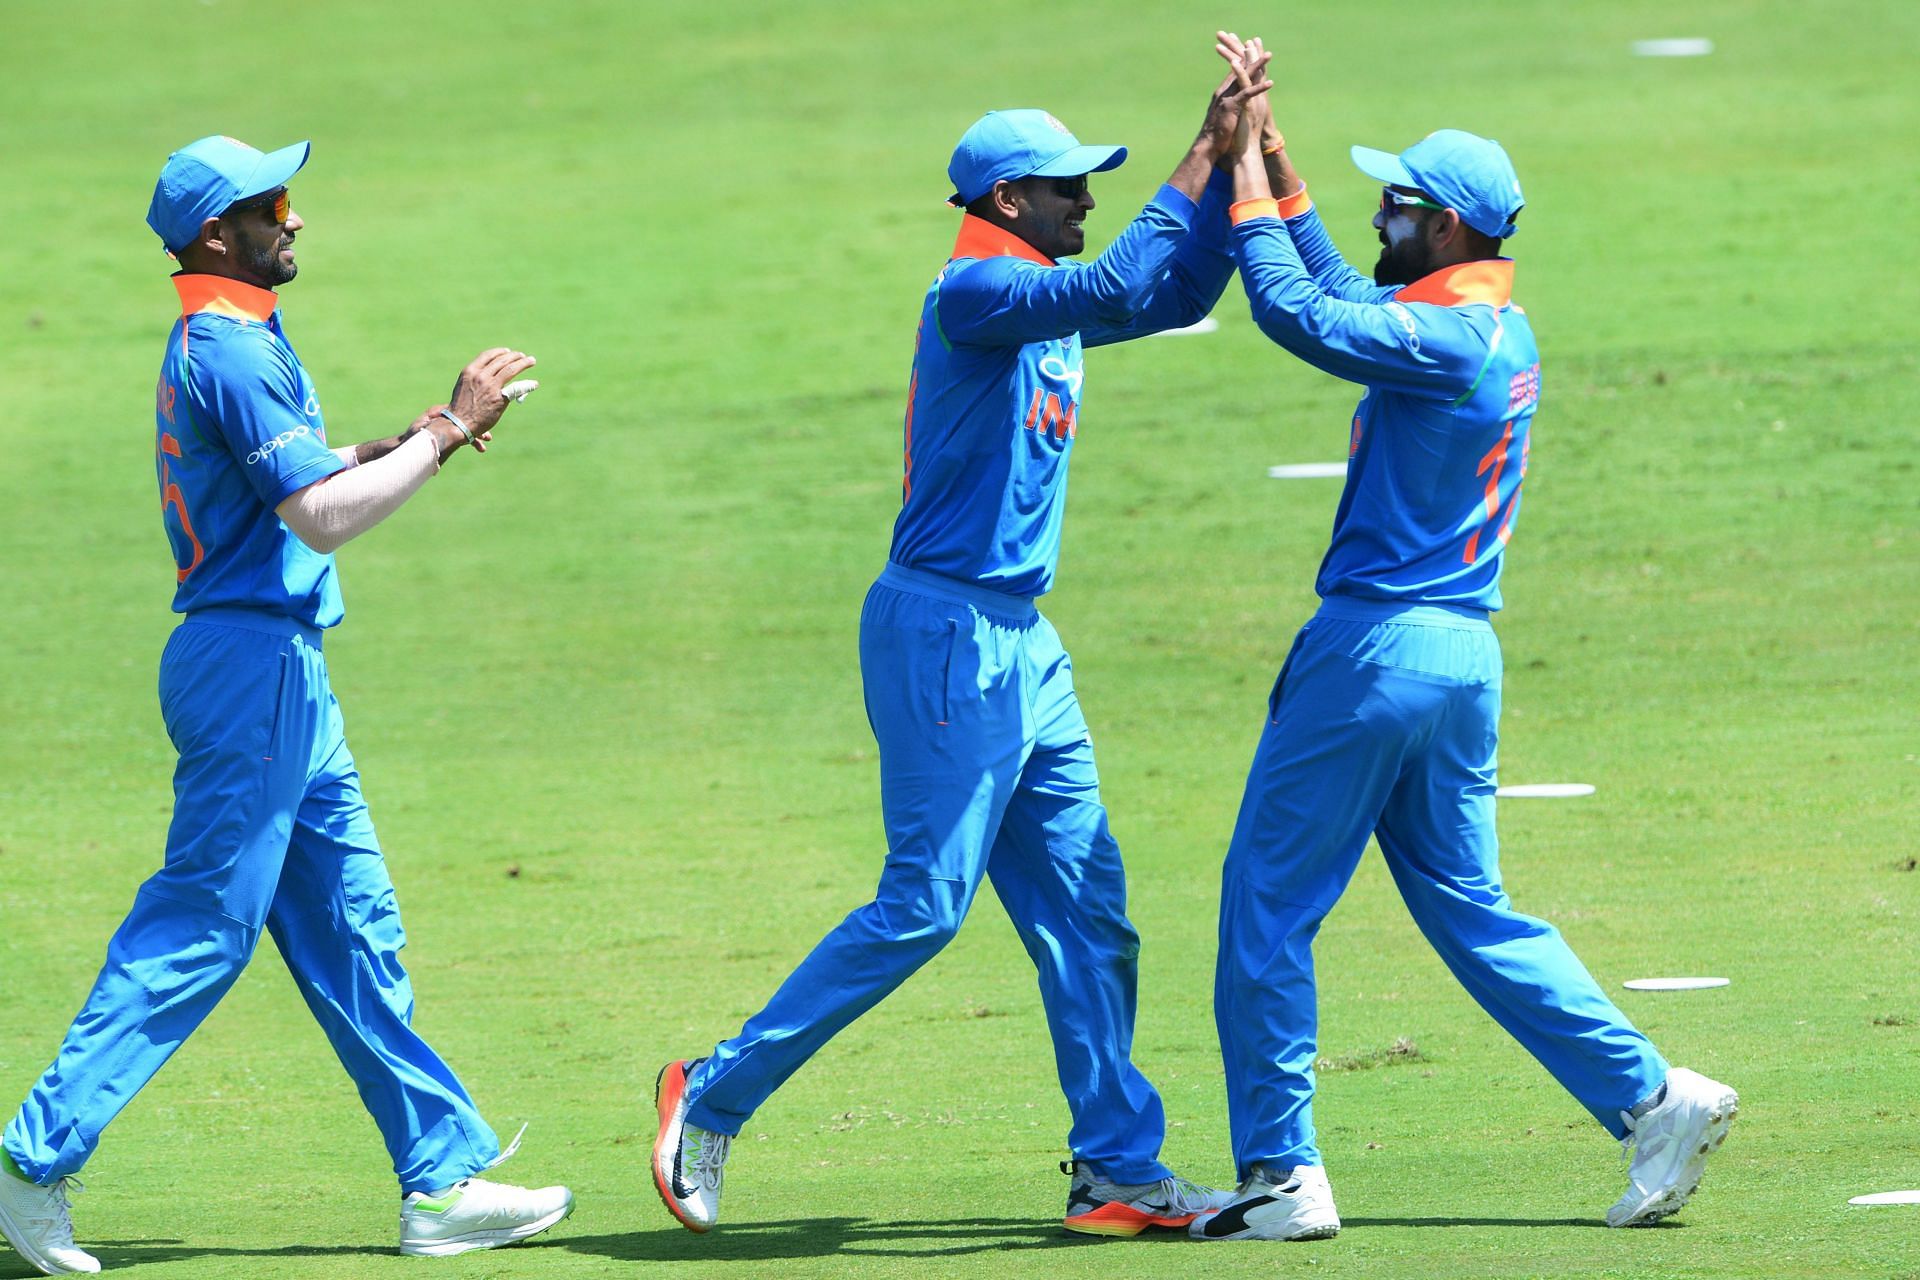 6th Momentum ODI: South Africa vs India - 2018 series